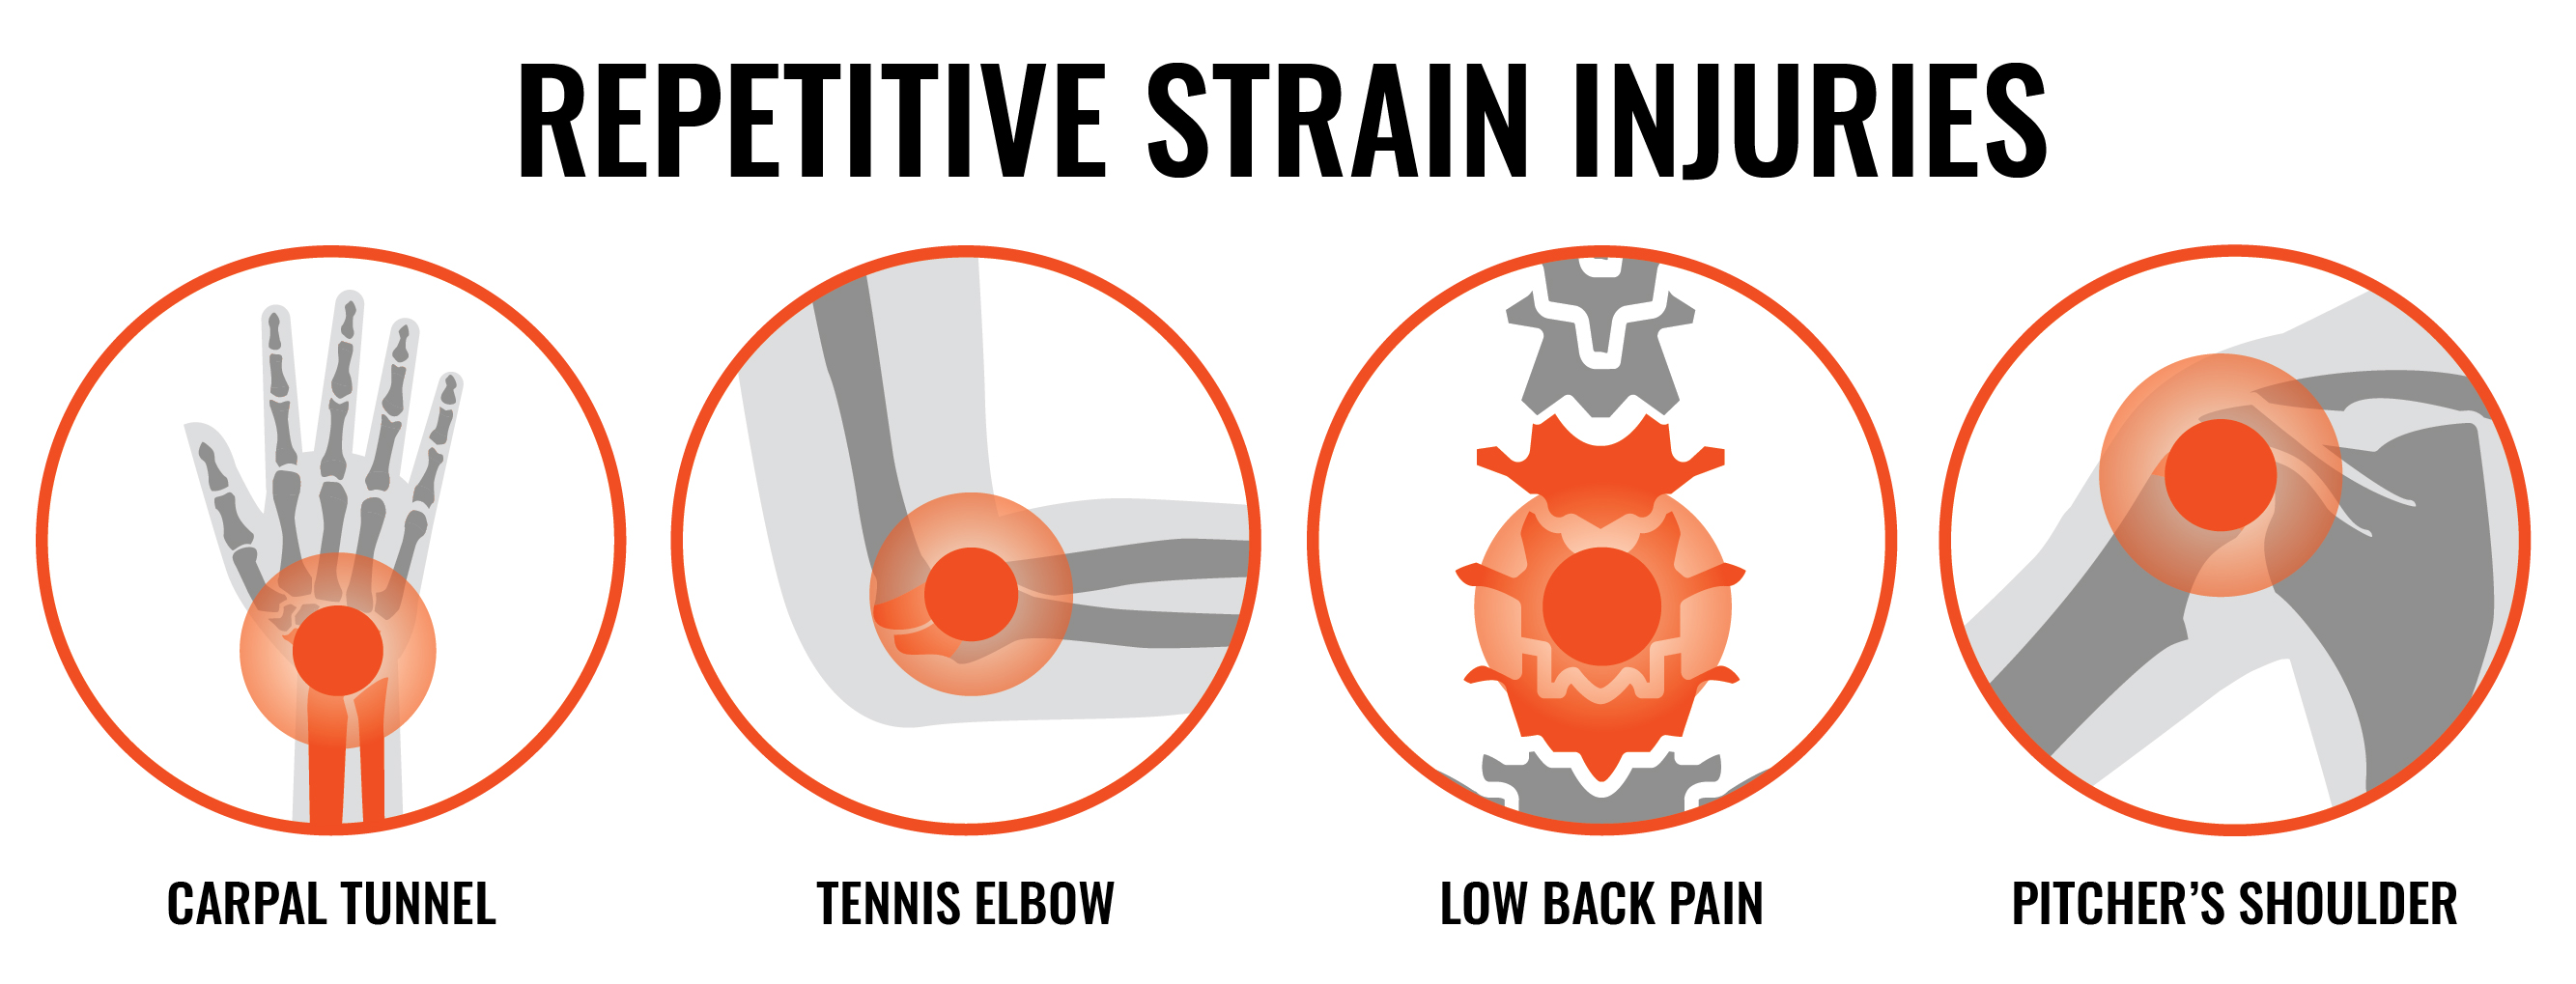 carpal tunnel, tennis elbow, low back pain, pitcher's shoulder